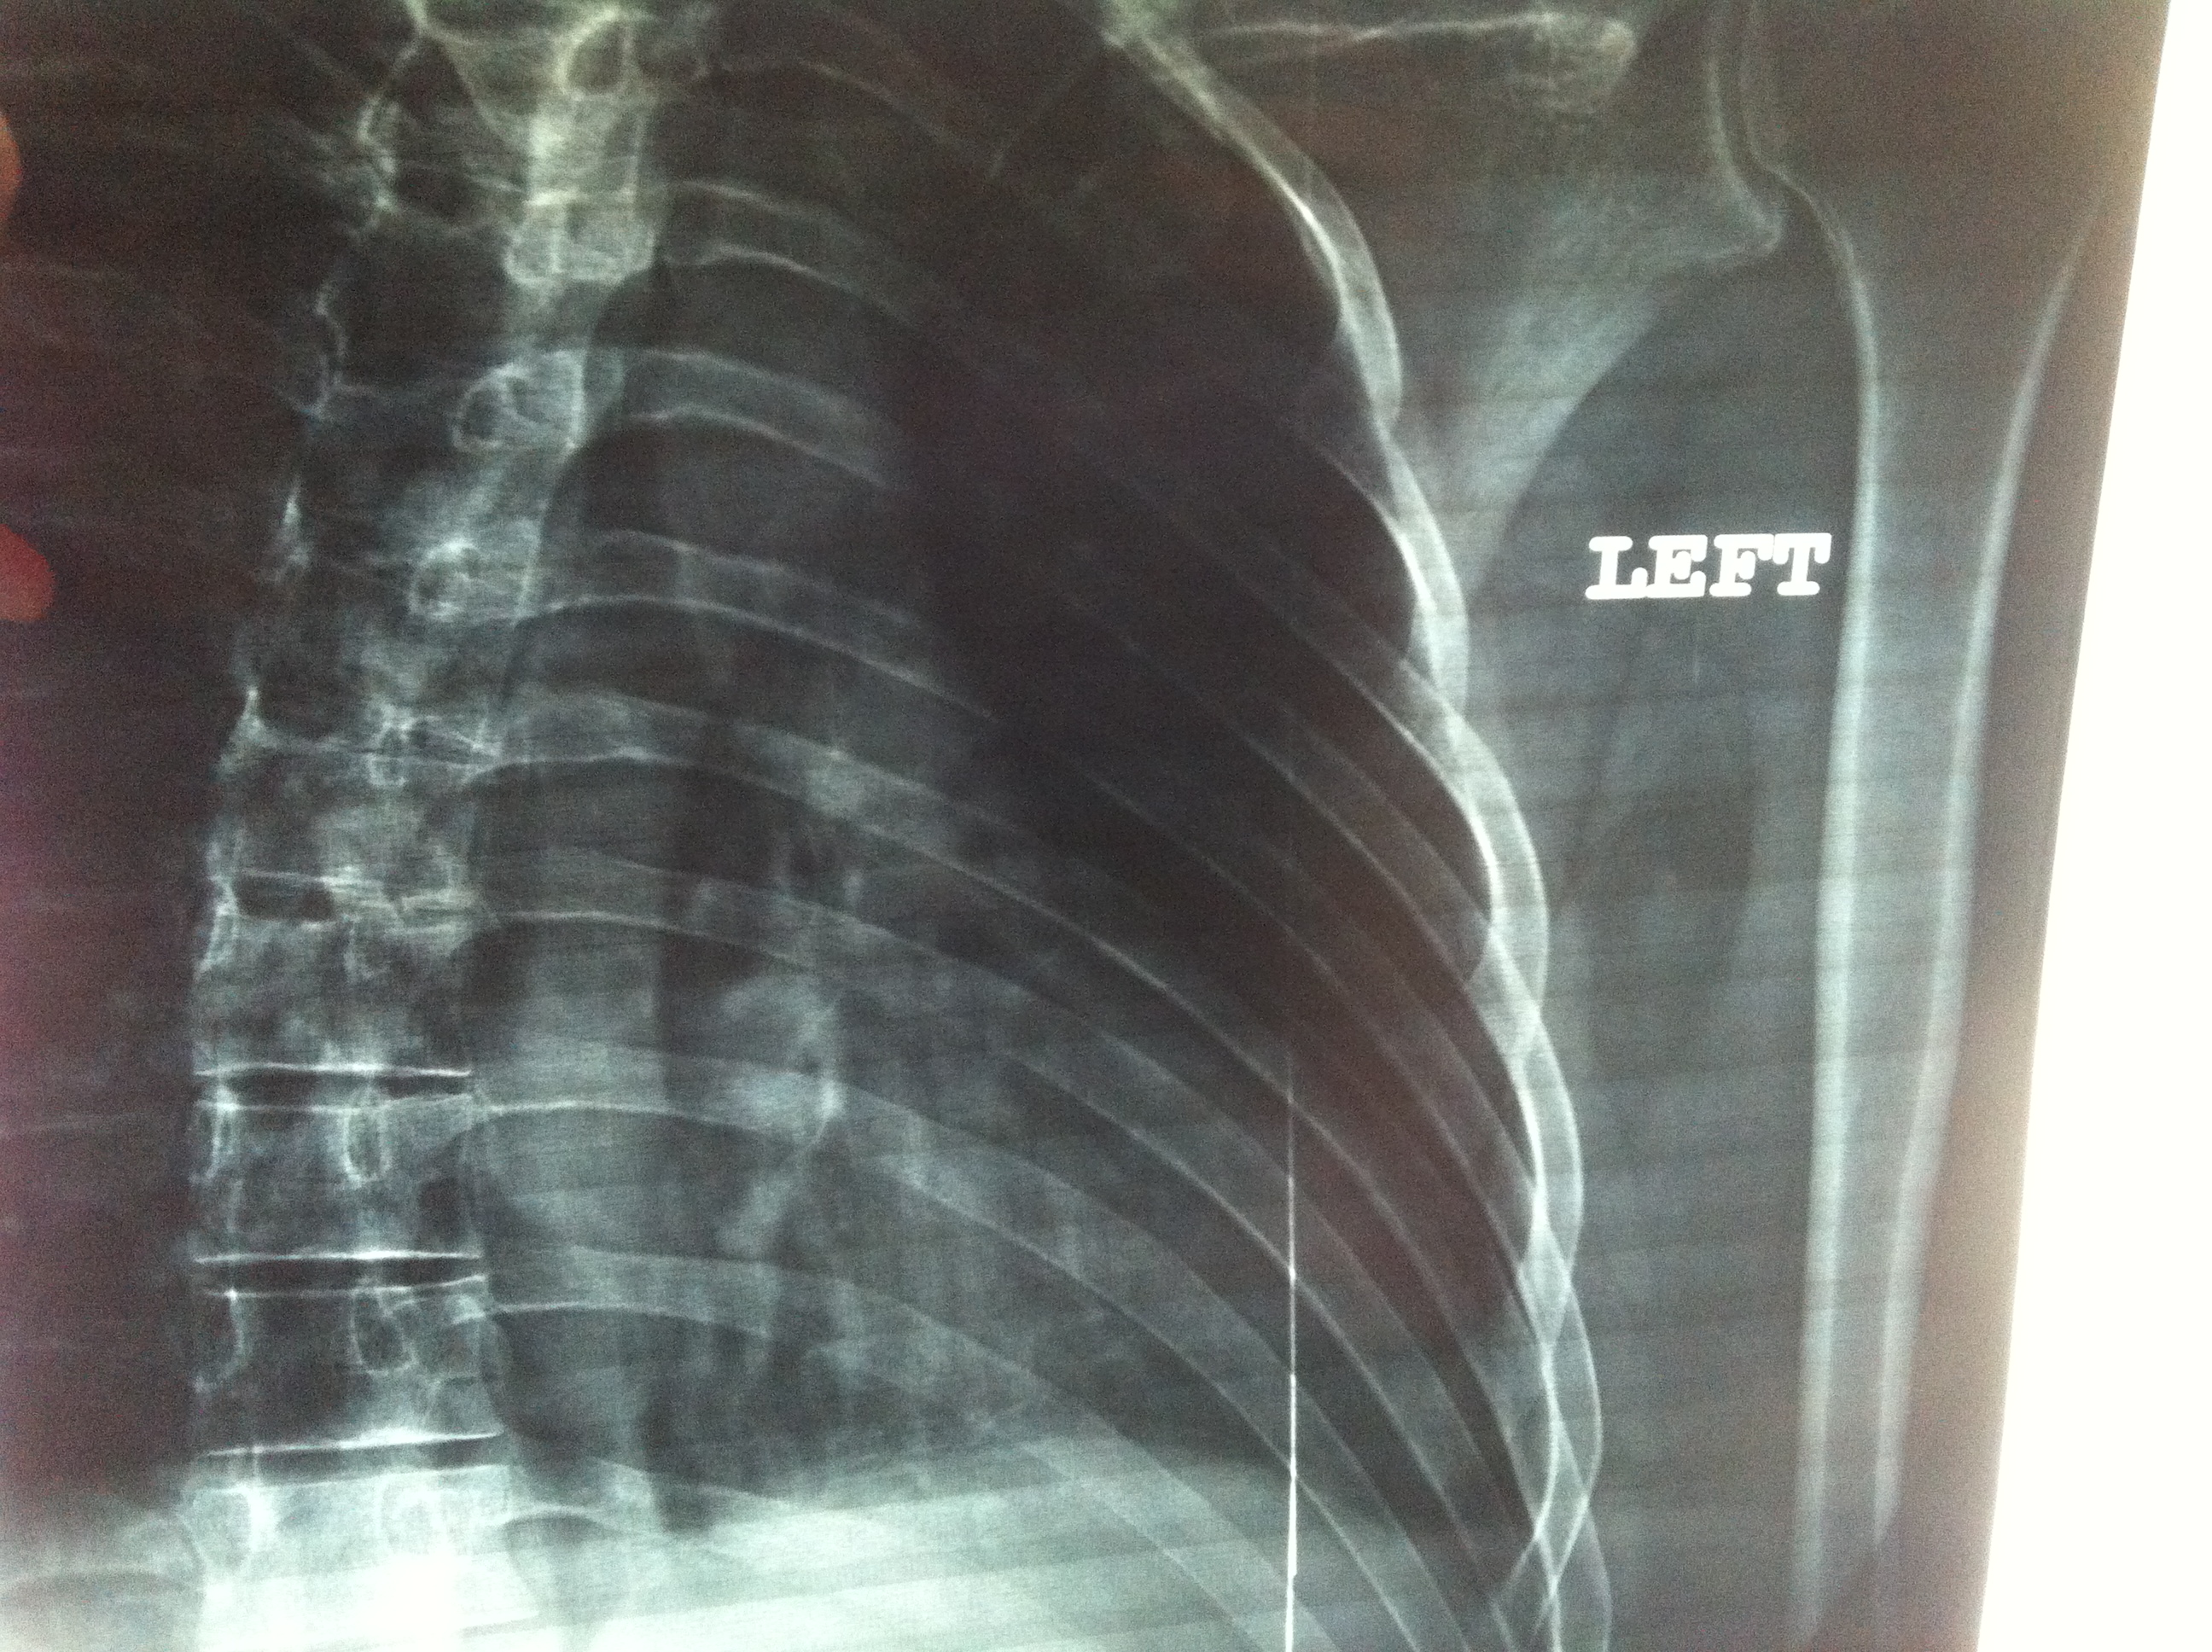 bruised ribs x ray